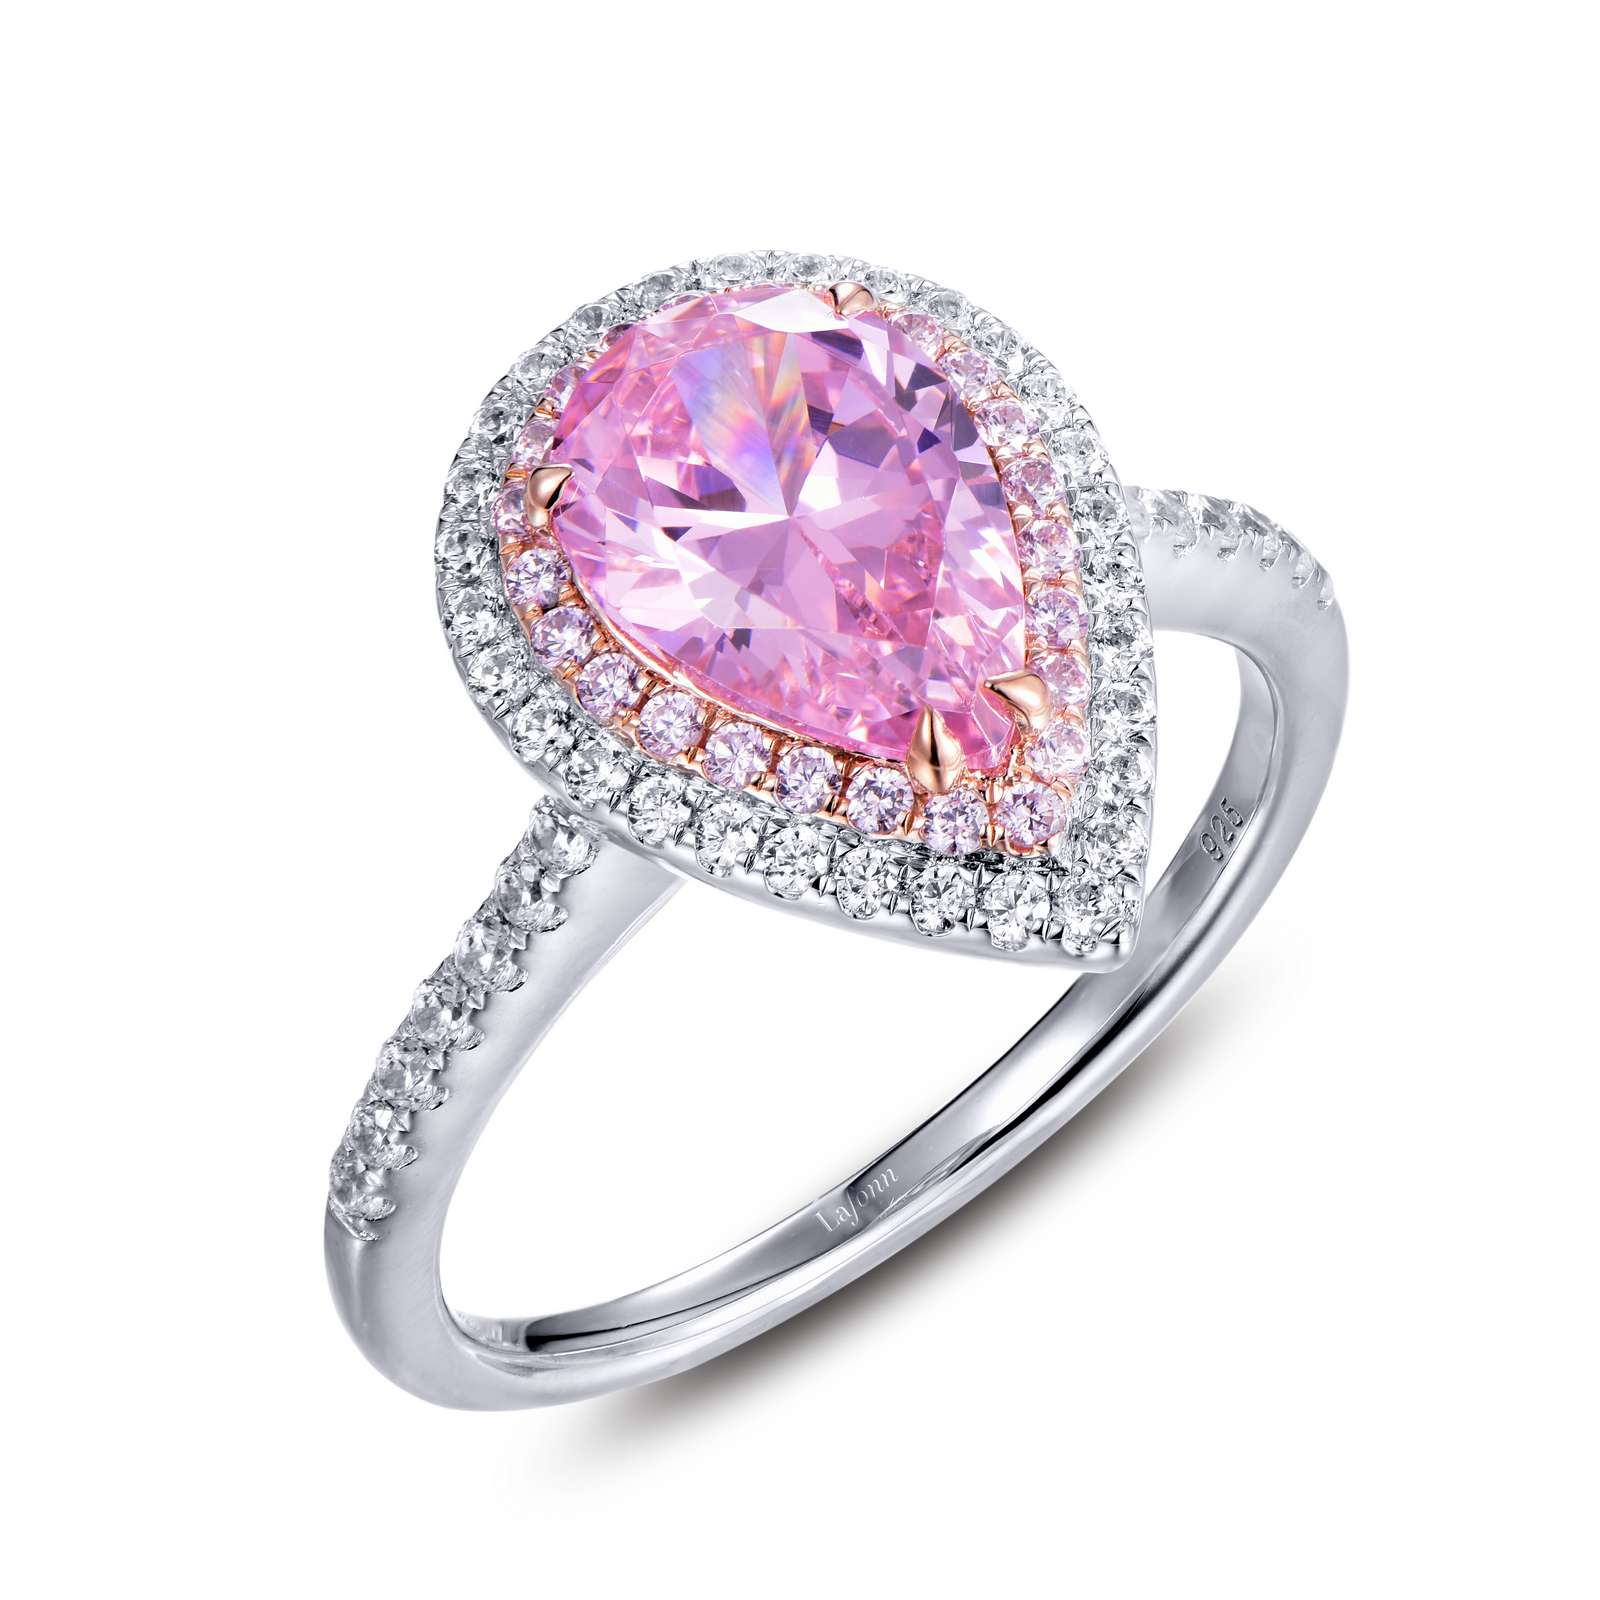 Double-Halo Engagement Ring Diamond Shop Ada, OK